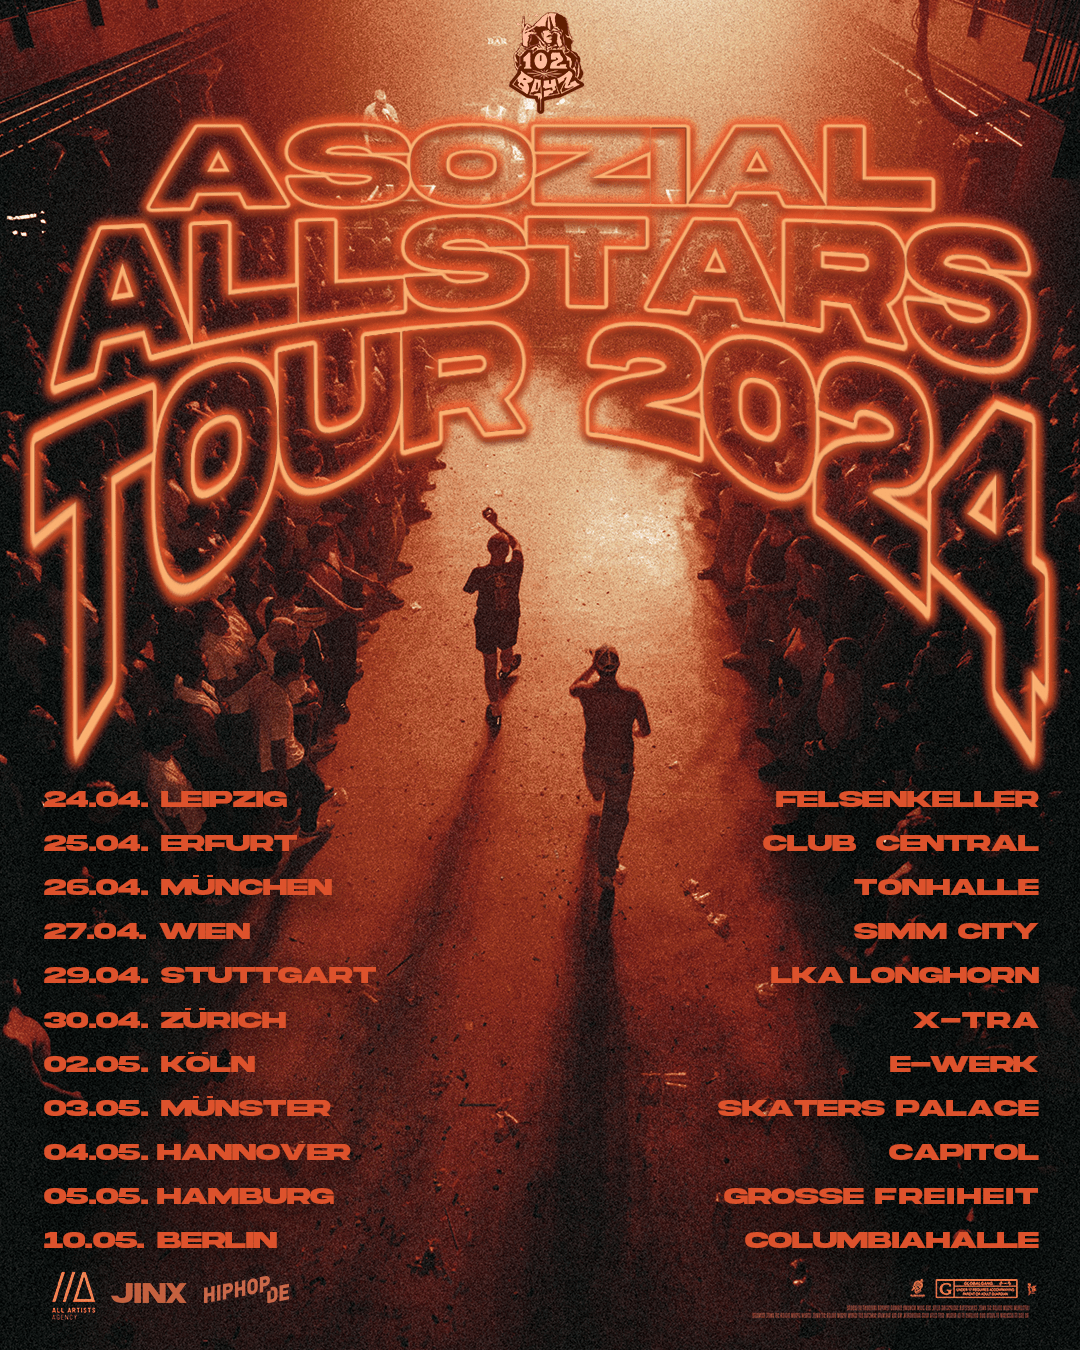 Tourposter der "Asozial Allstars Tour 2024" der 102 Boyz